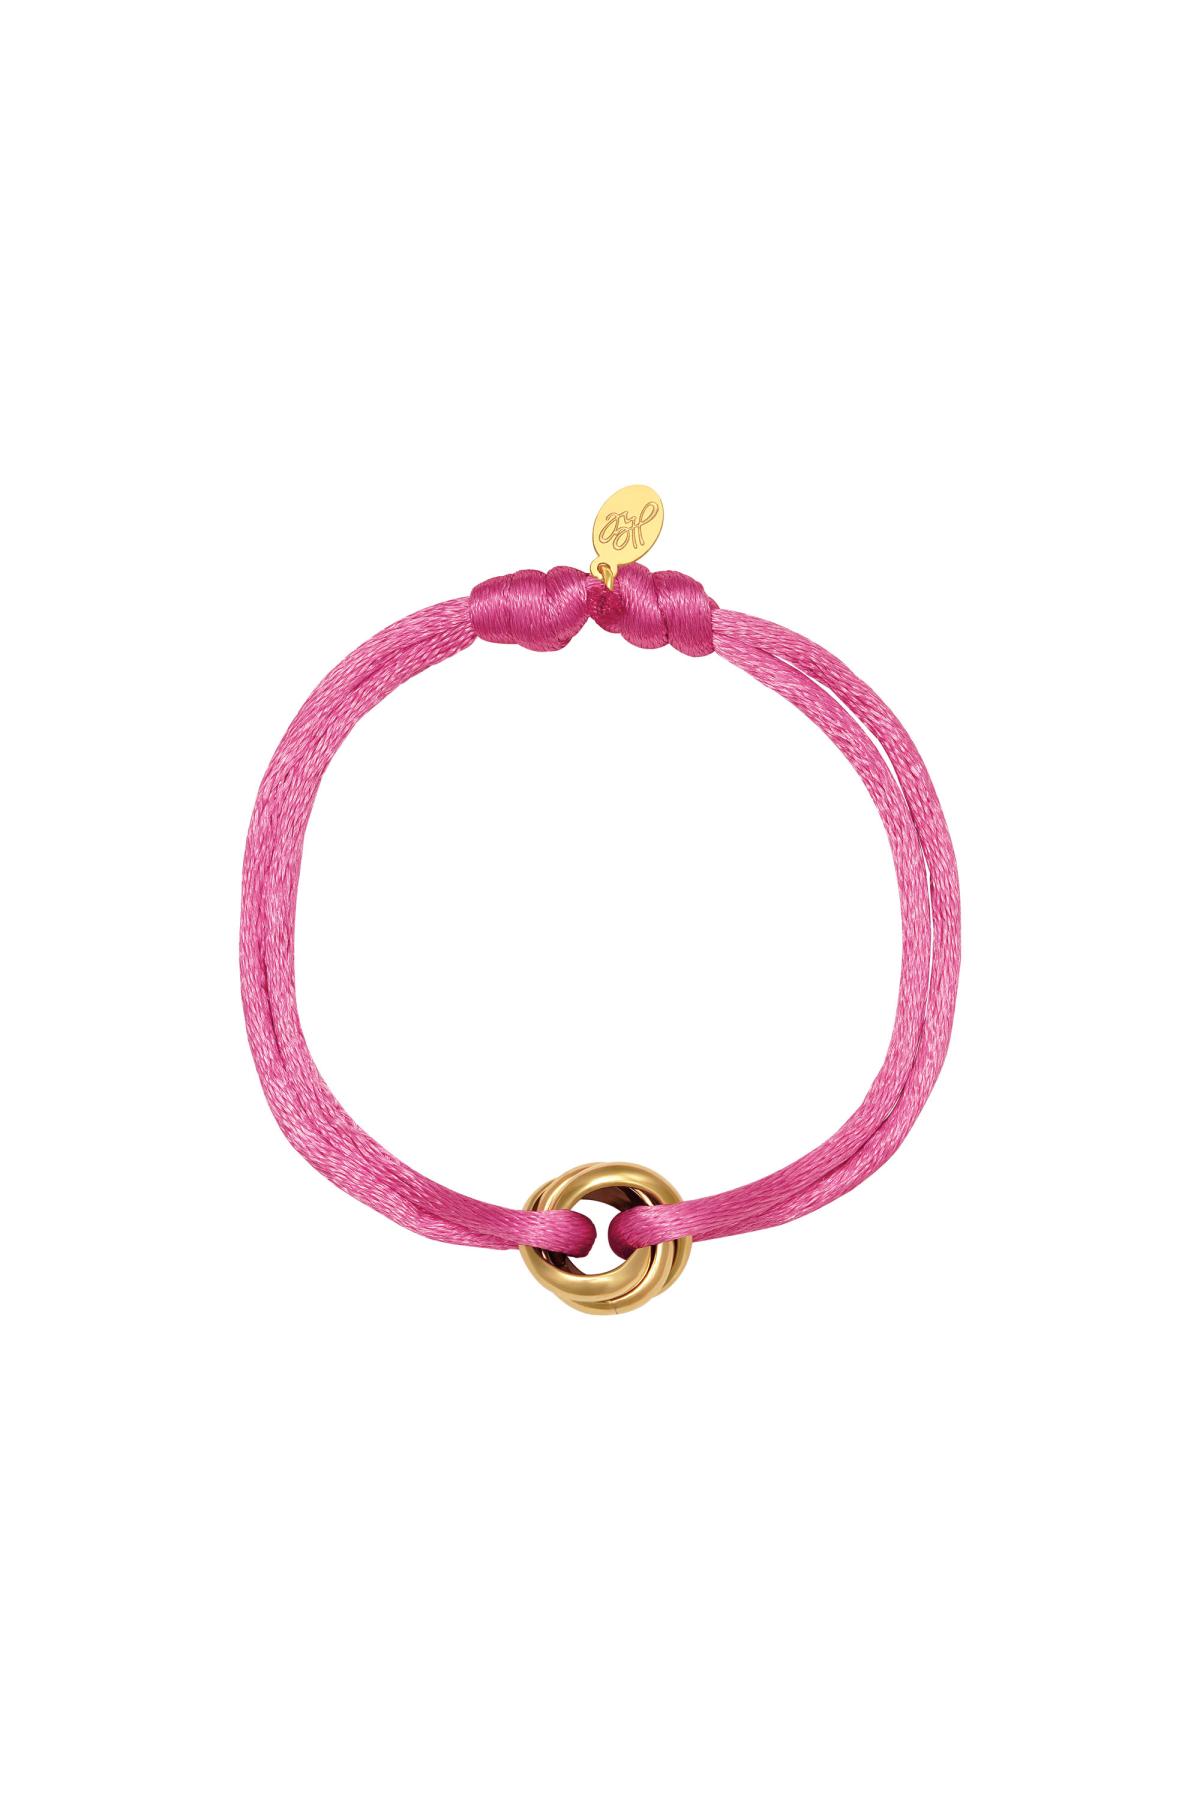 Baby Pink & Gold / Saten bileklik düğüm Baby Pink & Gold Polyester Resim16